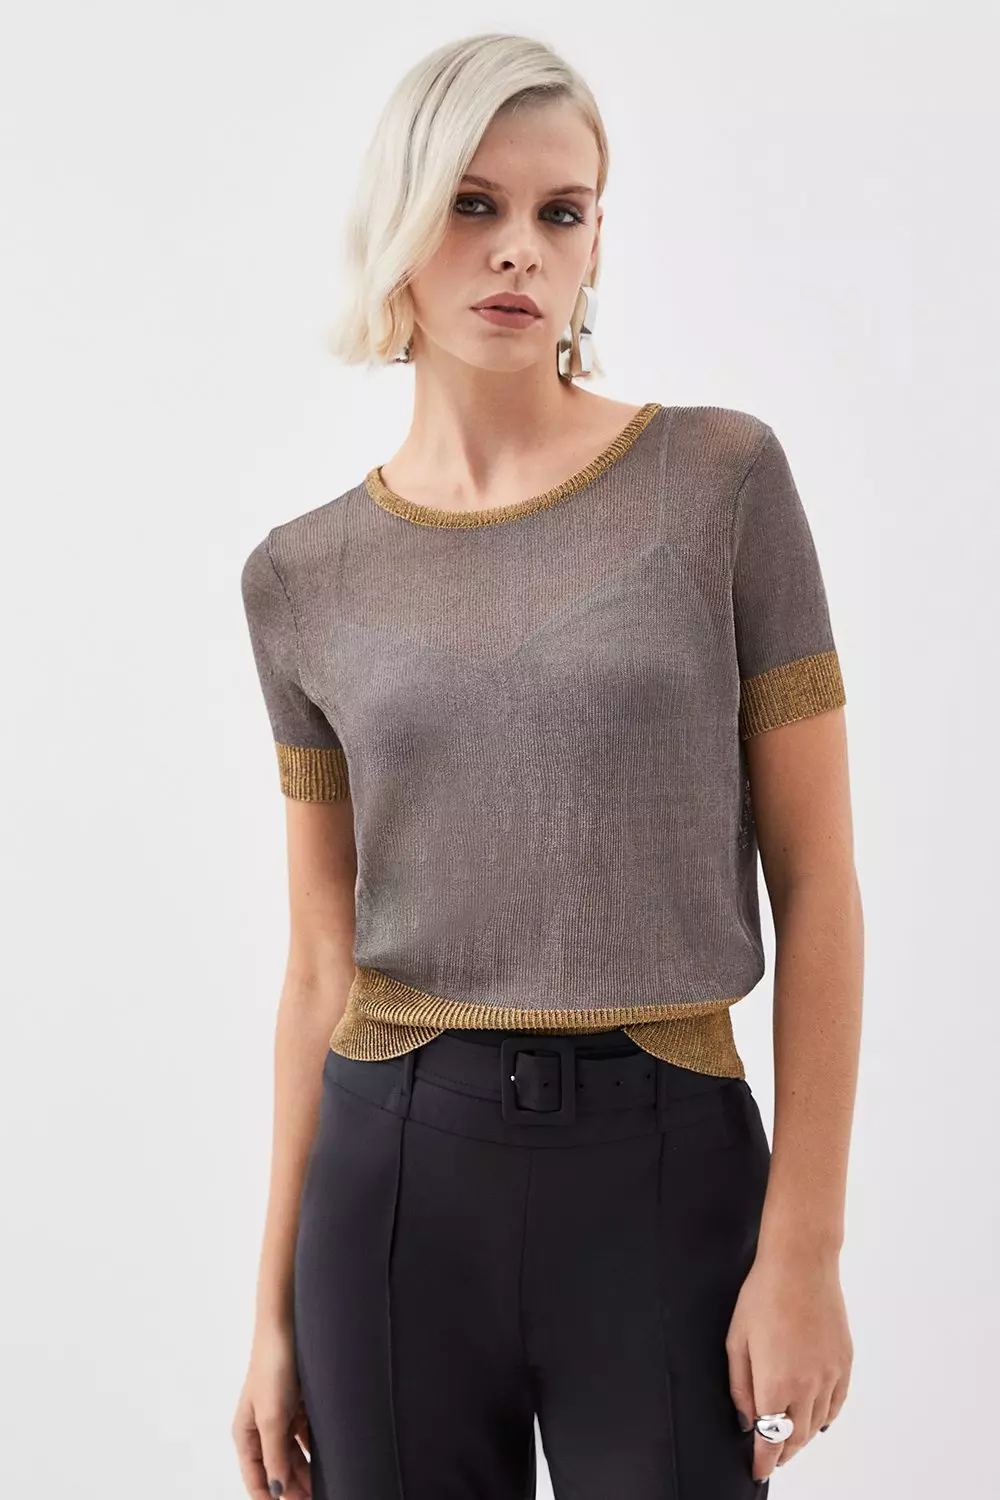 The Founder Premium Metallic Sparkle Knit Top | Karen Millen